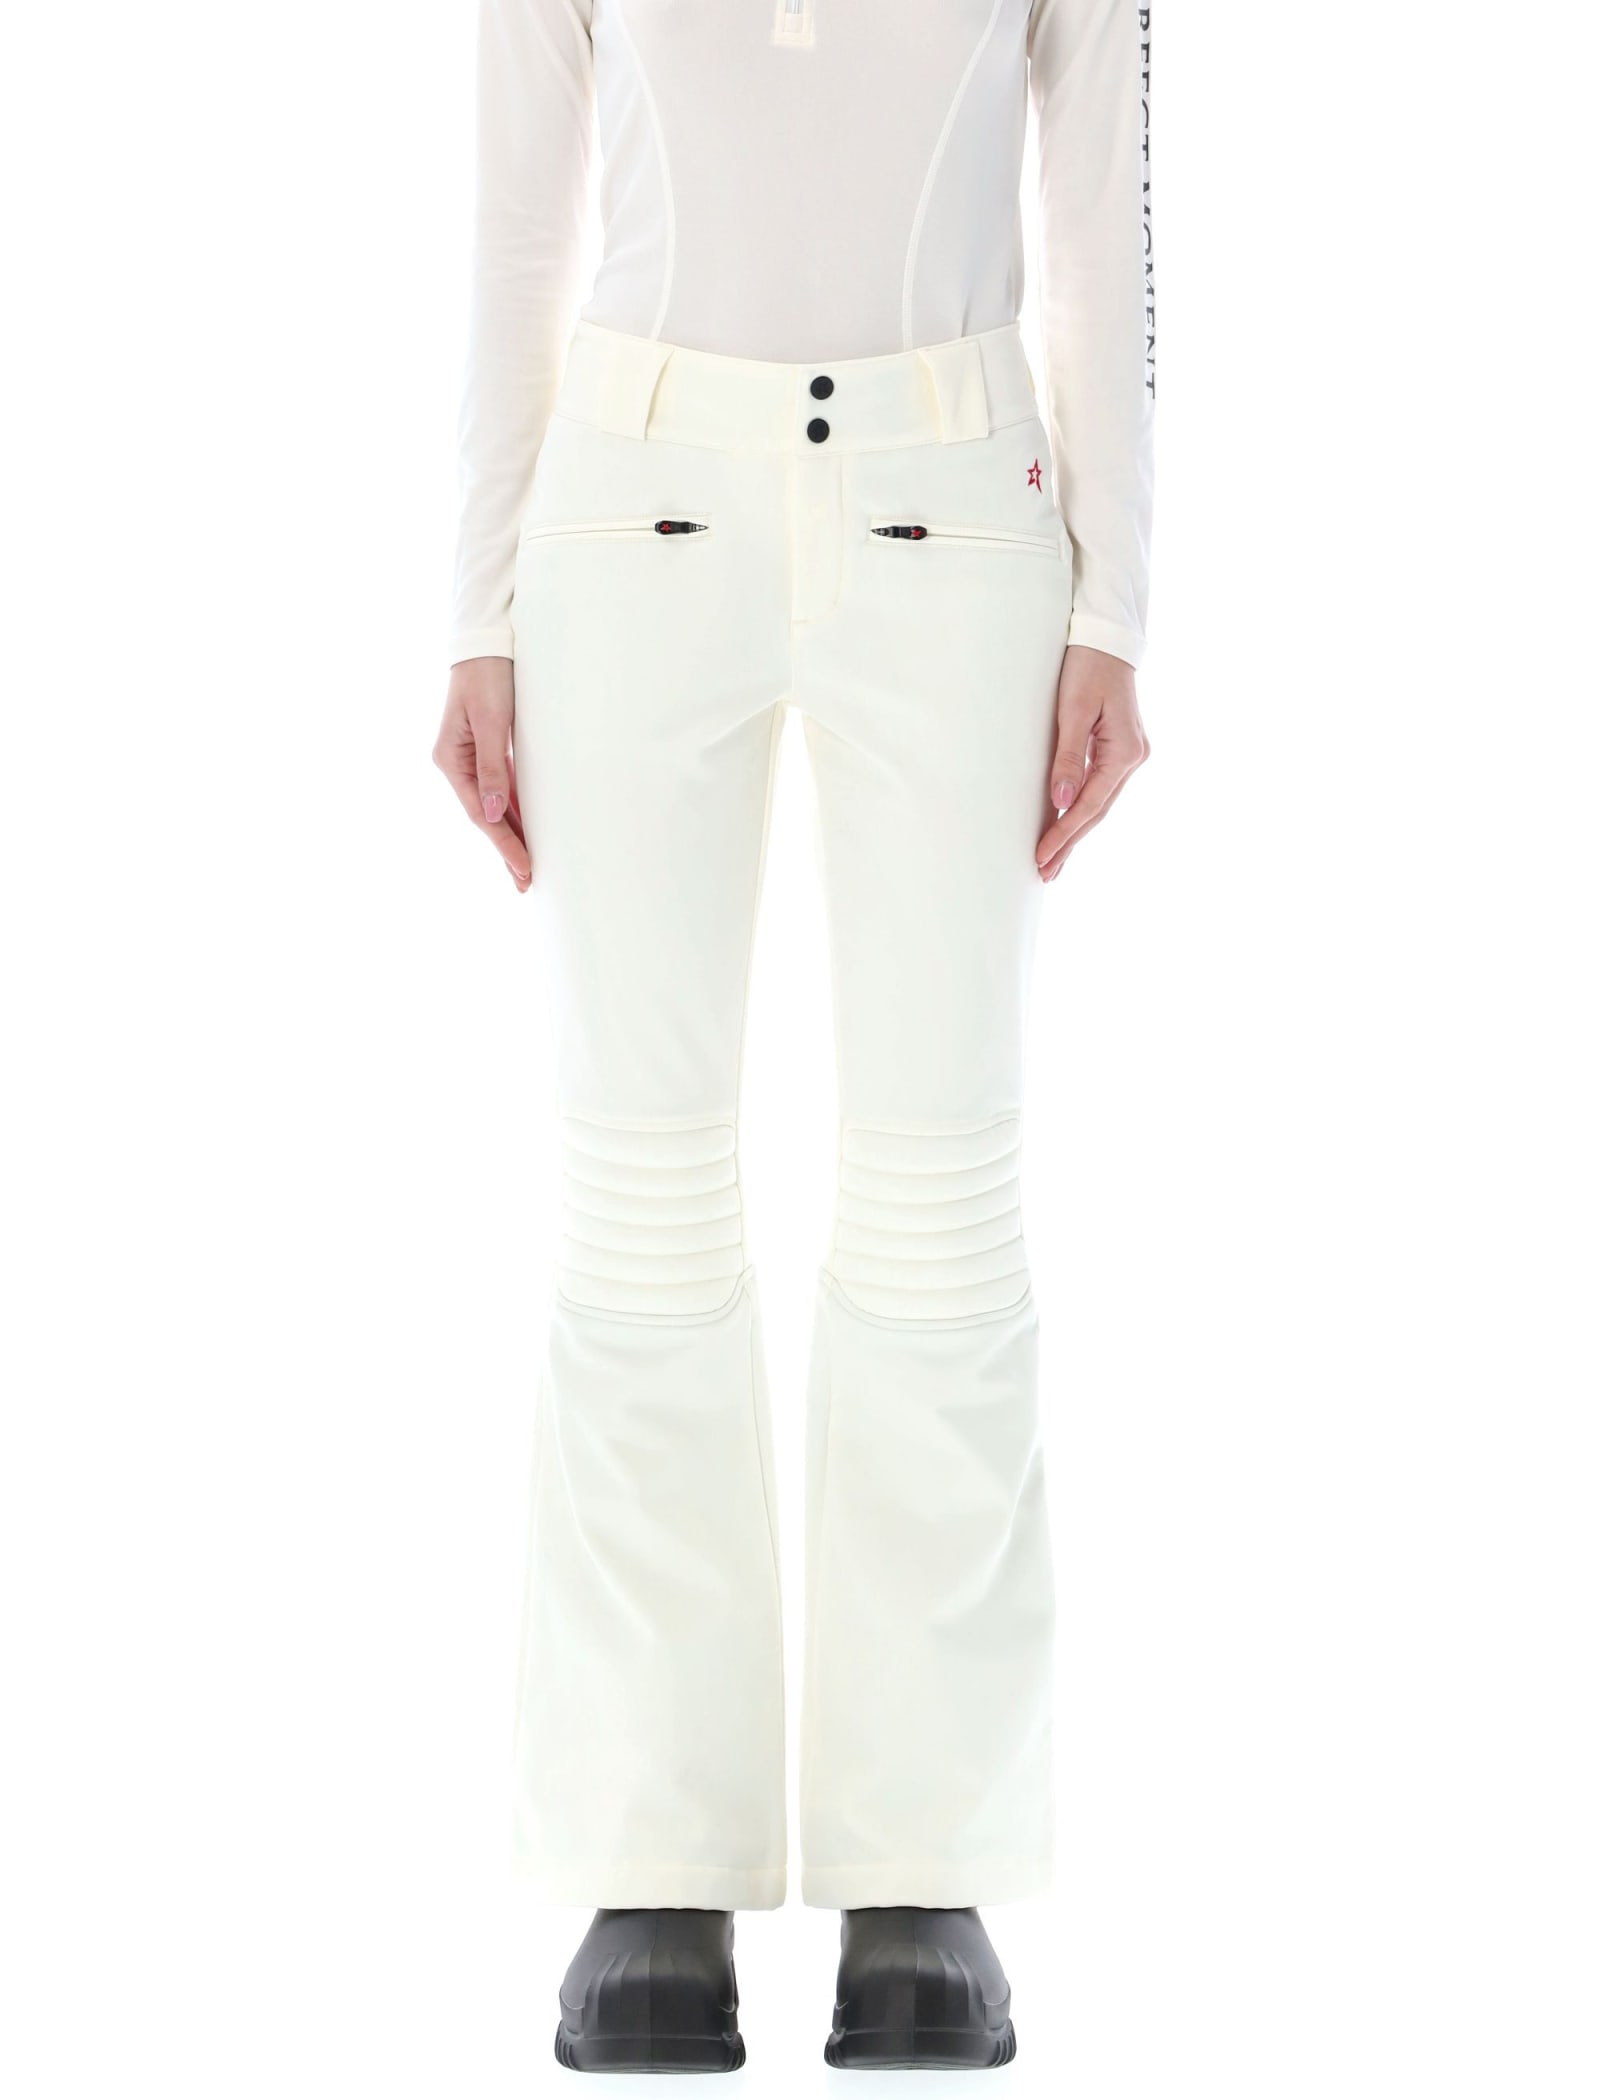 Aurora high-rise soft shell flared ski pants in white - Perfect